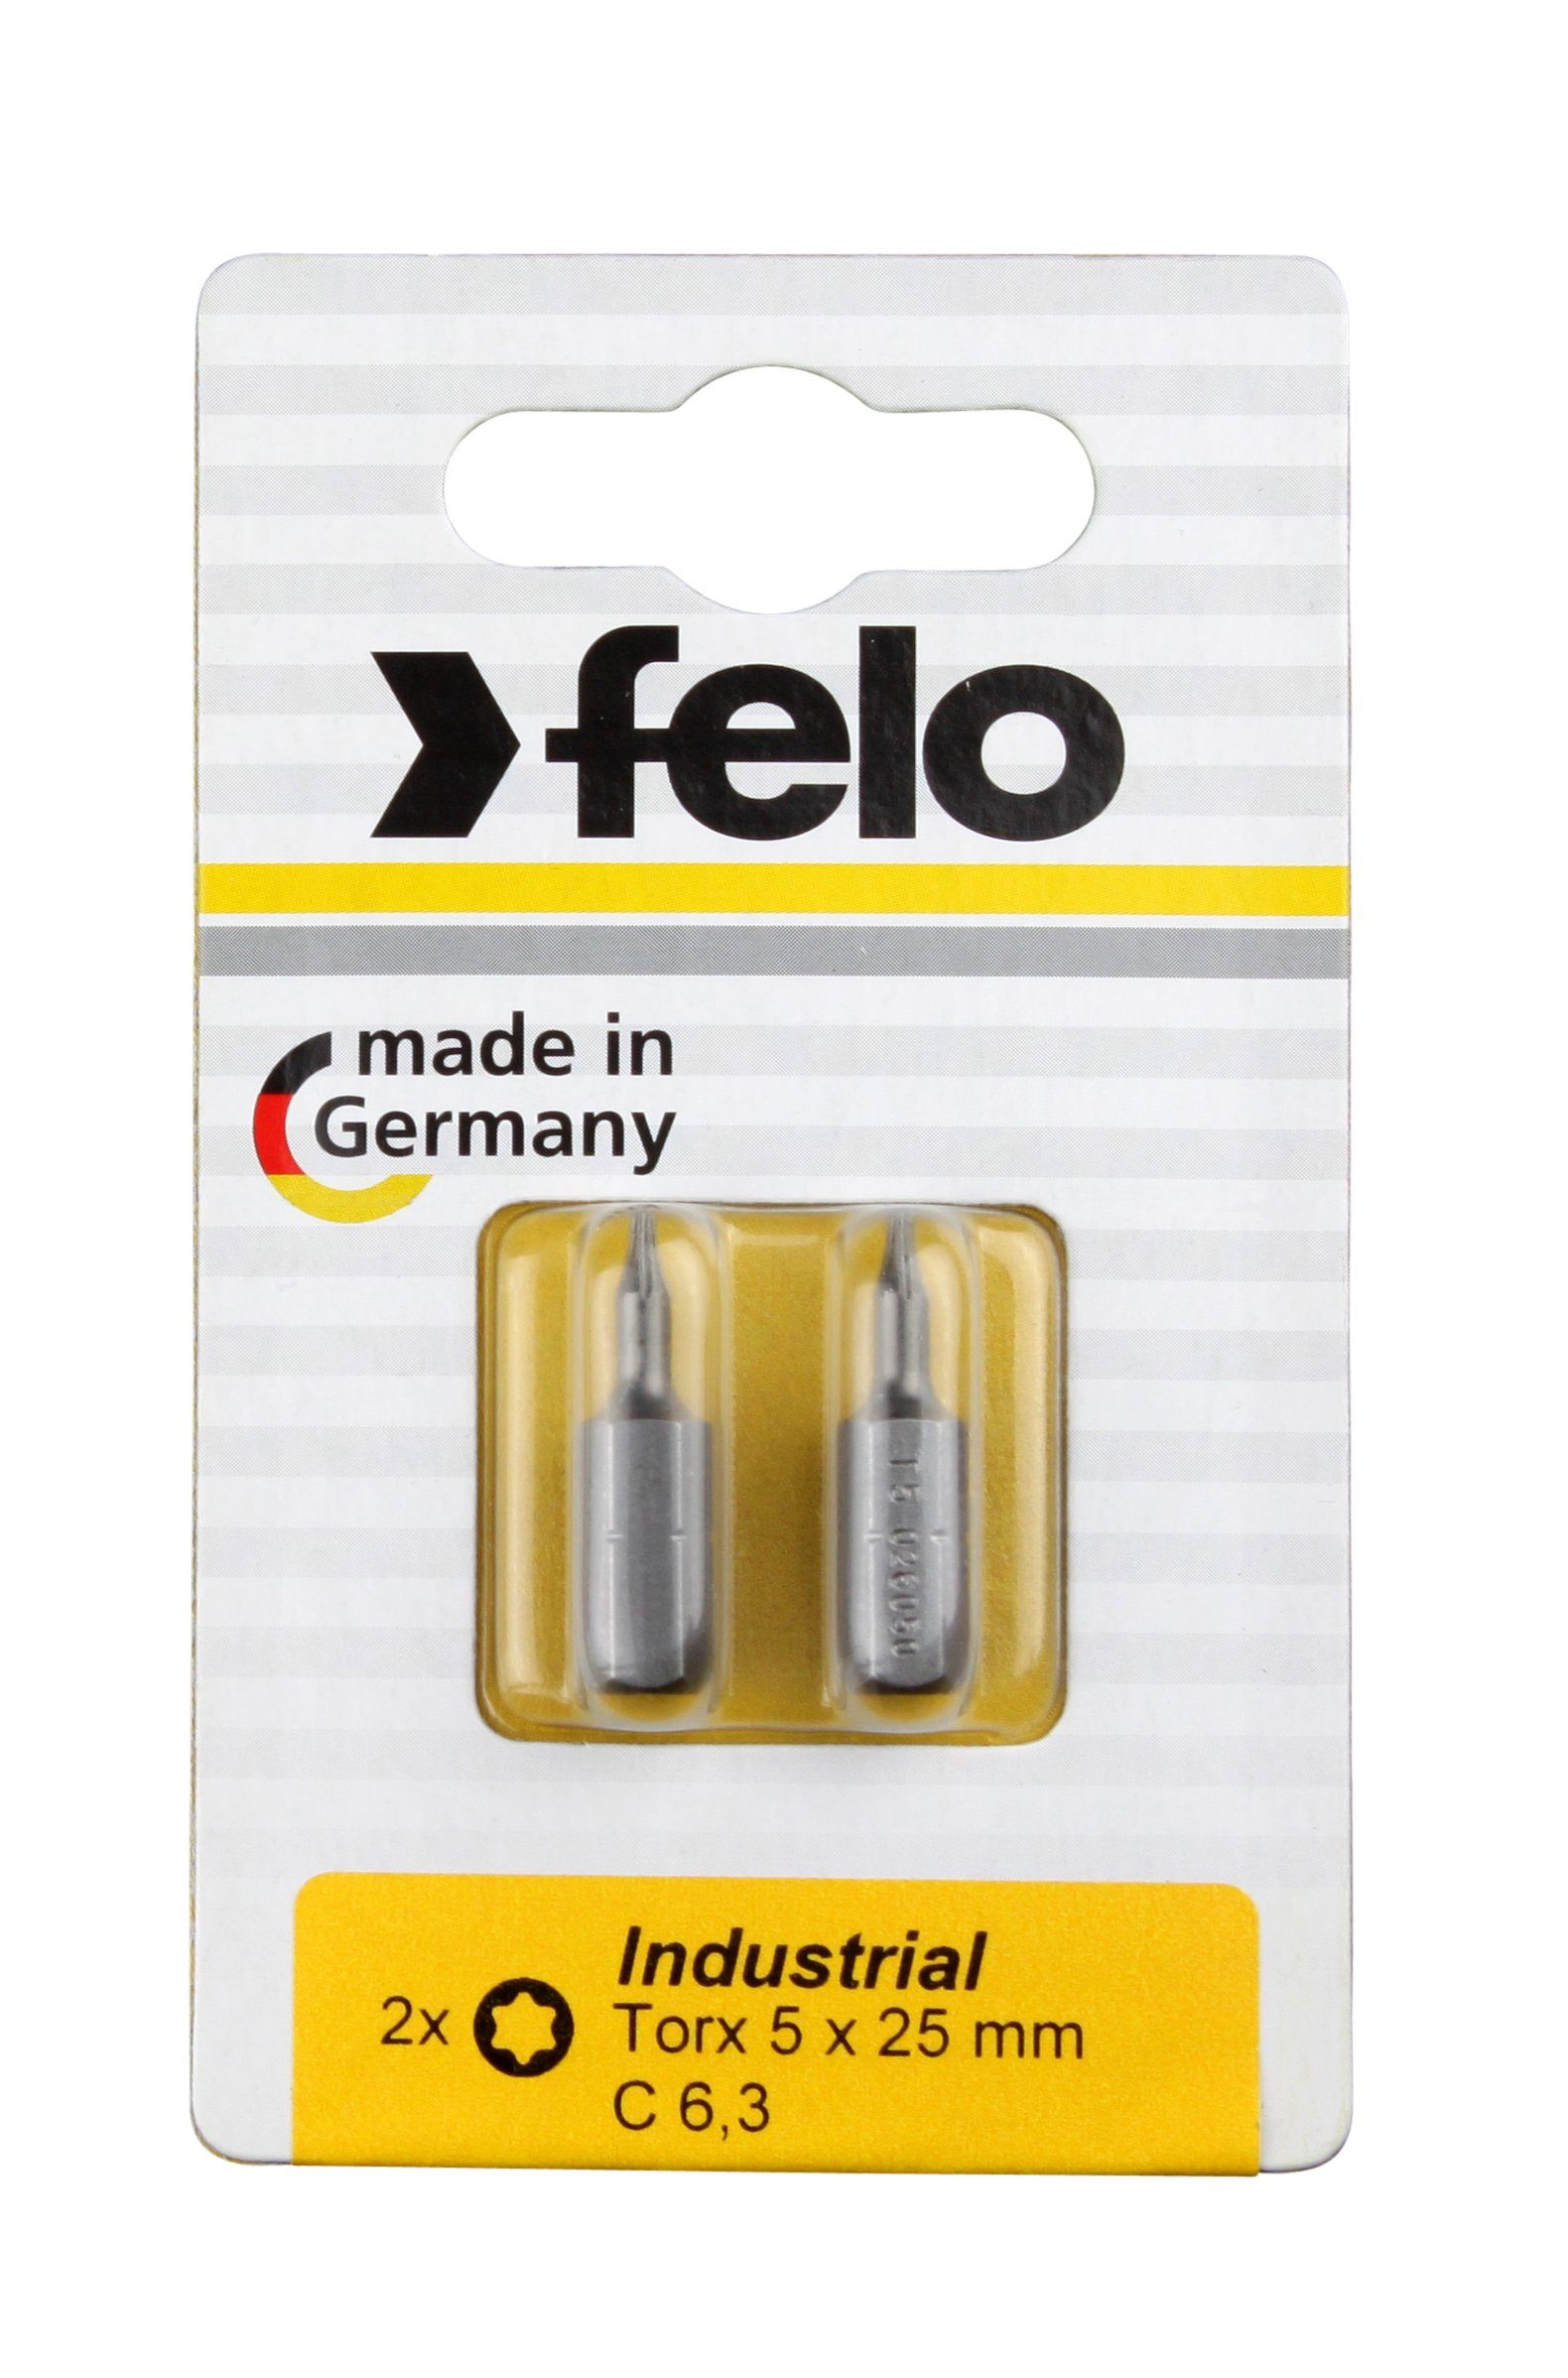 Felo Torx-Bit Felo Bit, Industrie C 6,3 x 25mm, 2 Stk auf Karte 2x Tx 5